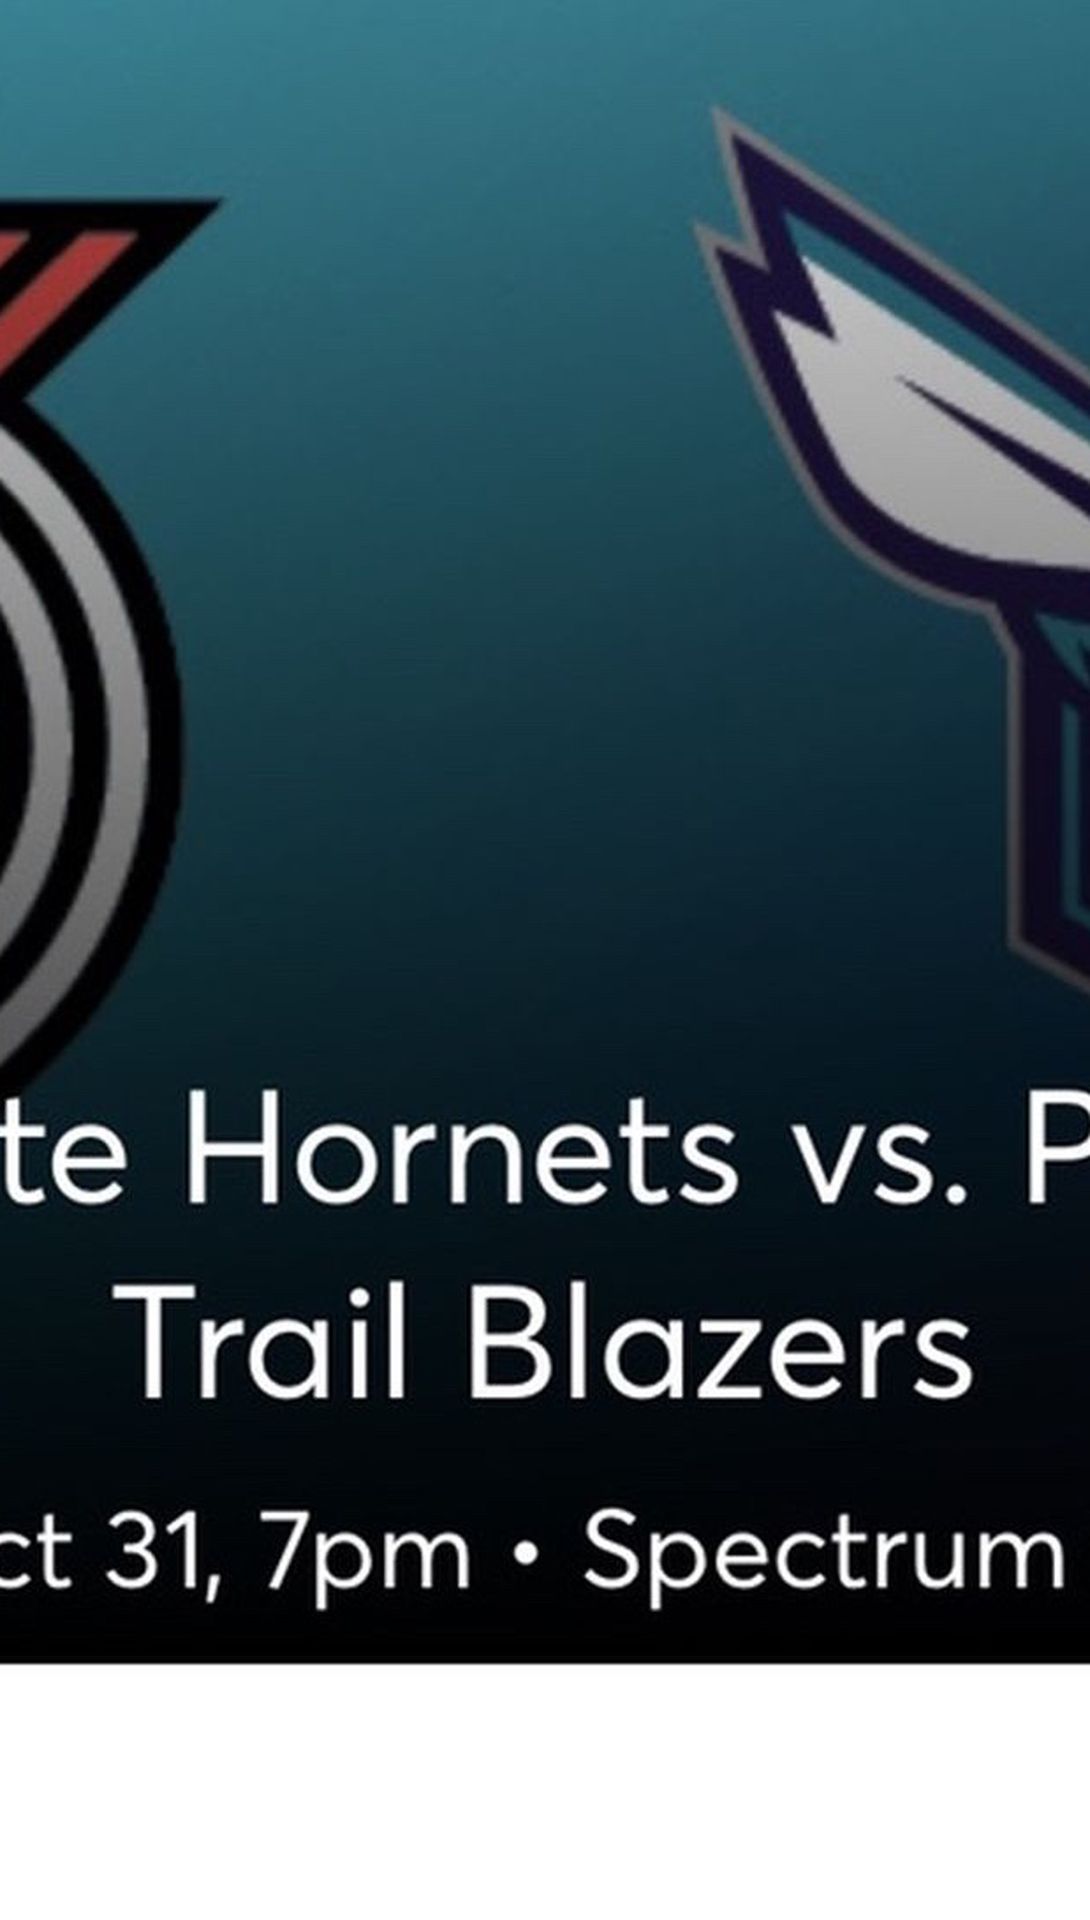 Hornets trailblazers Tickets 10/31